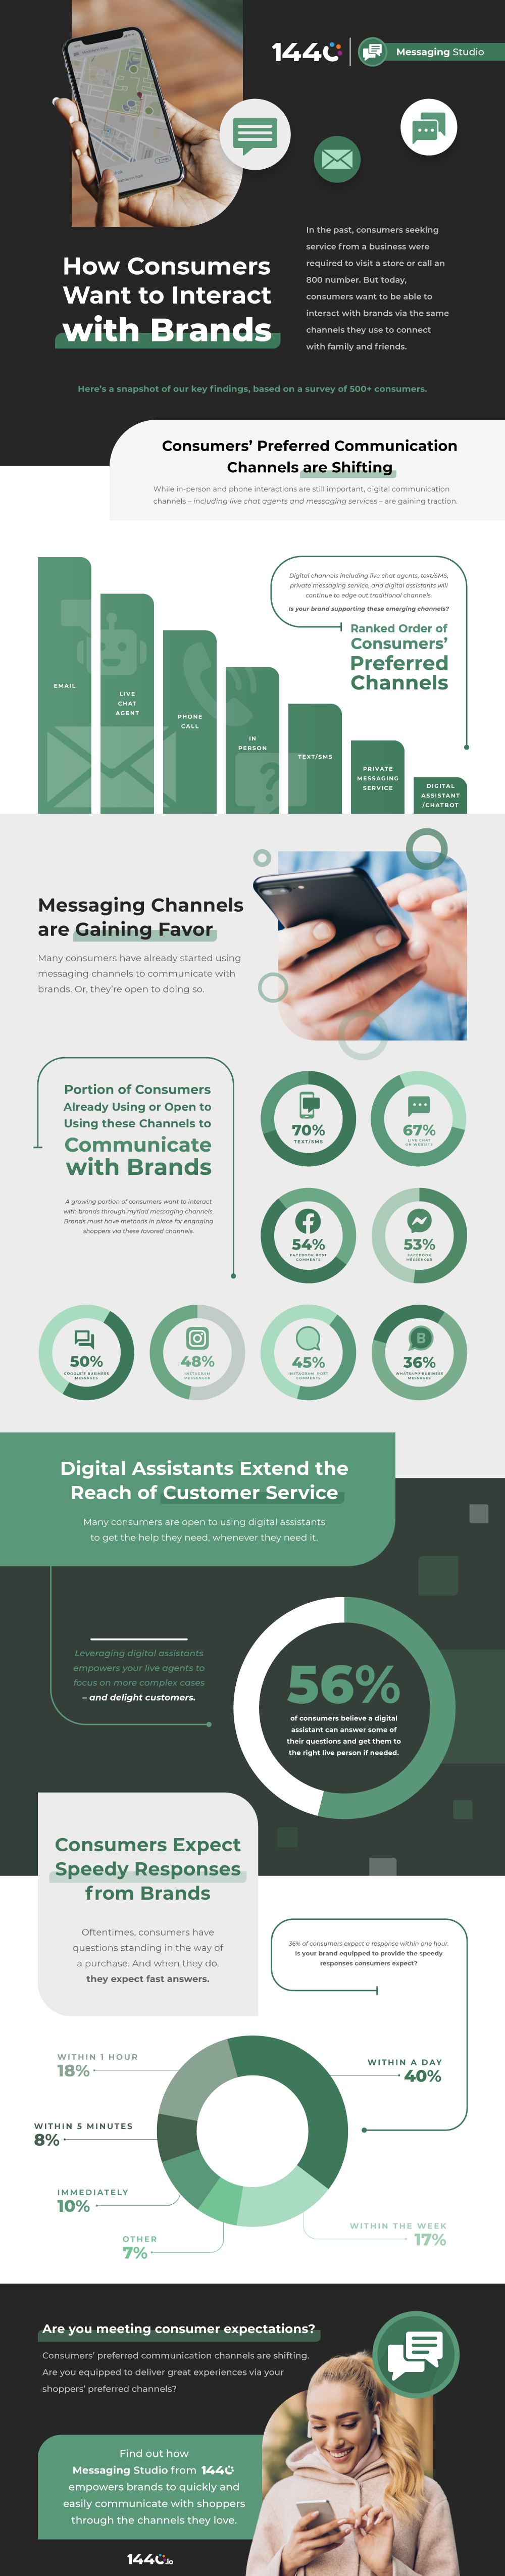 Consumer Conversation Preferences Infographic